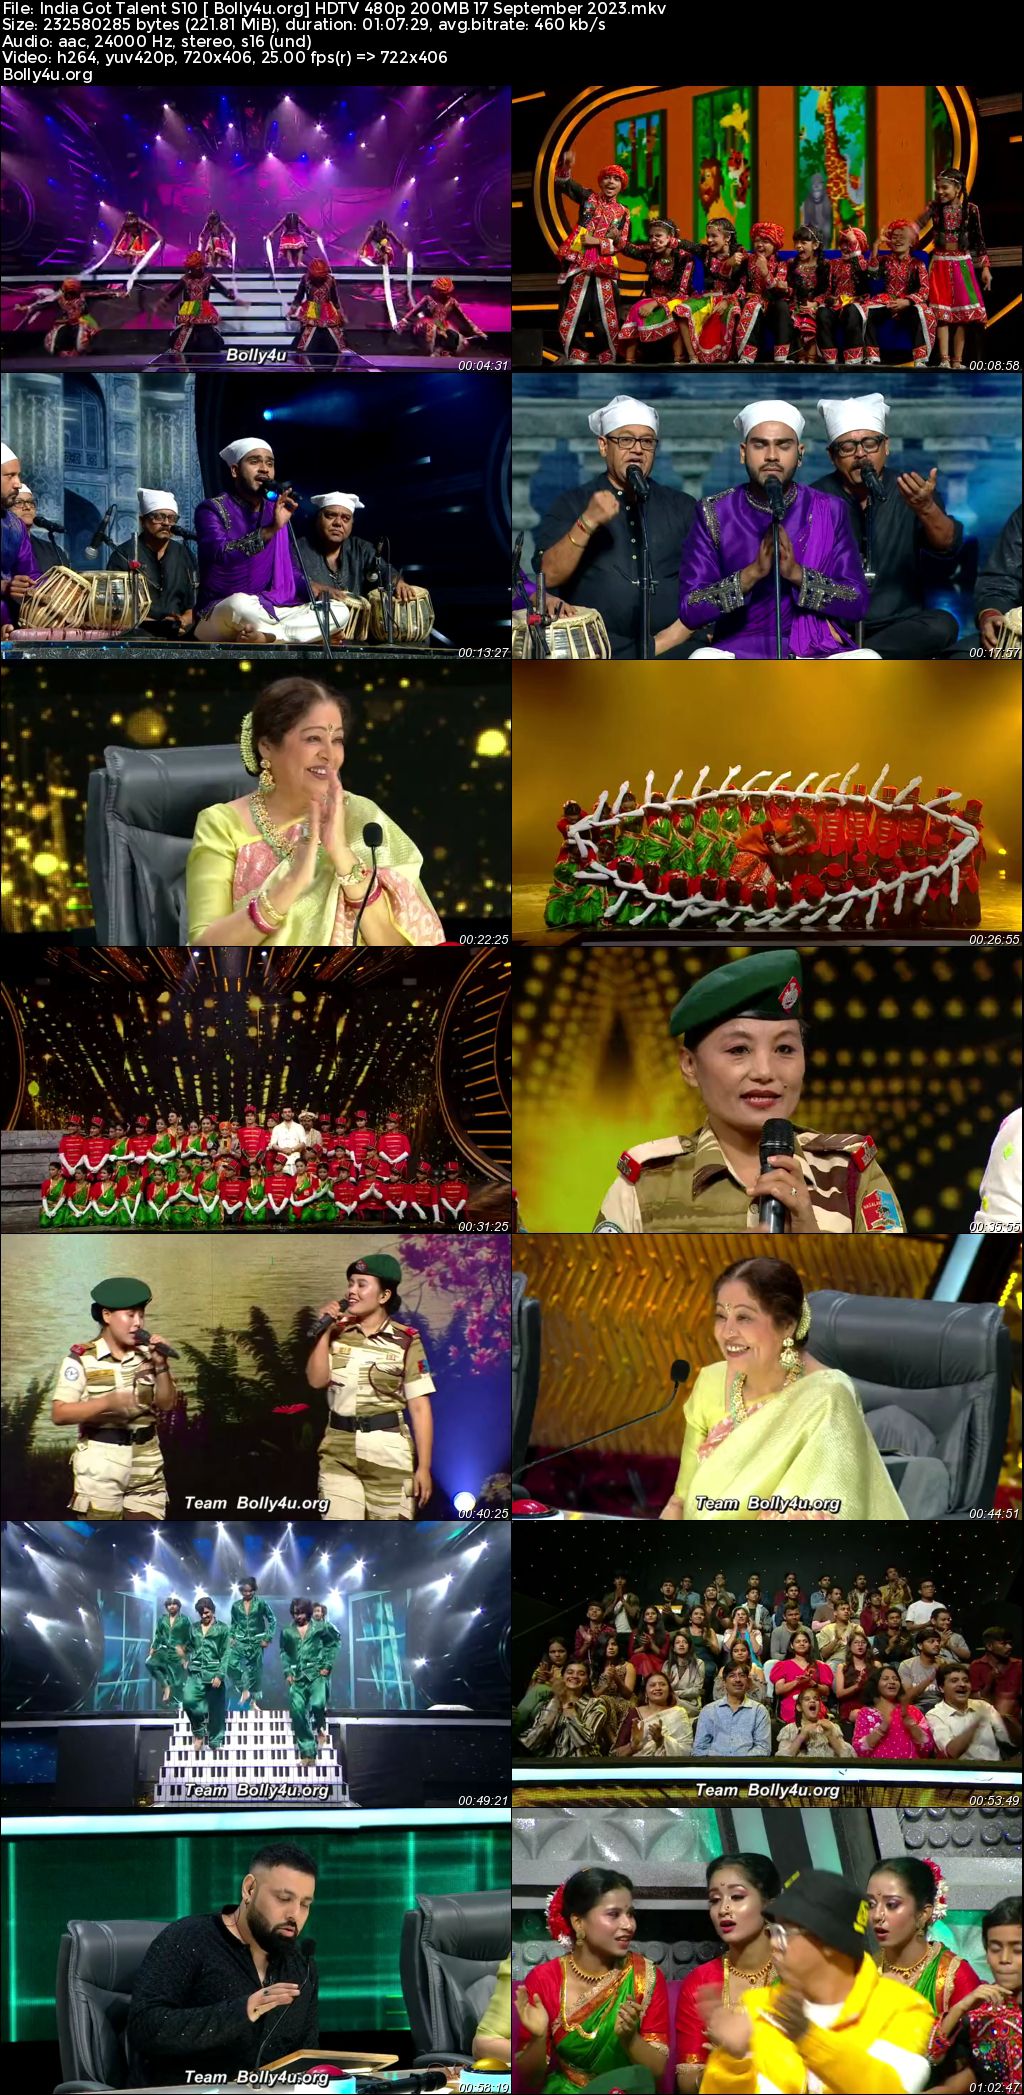 India Got Talent S10 HDTV 480p 200MB 17 September 2023 Download